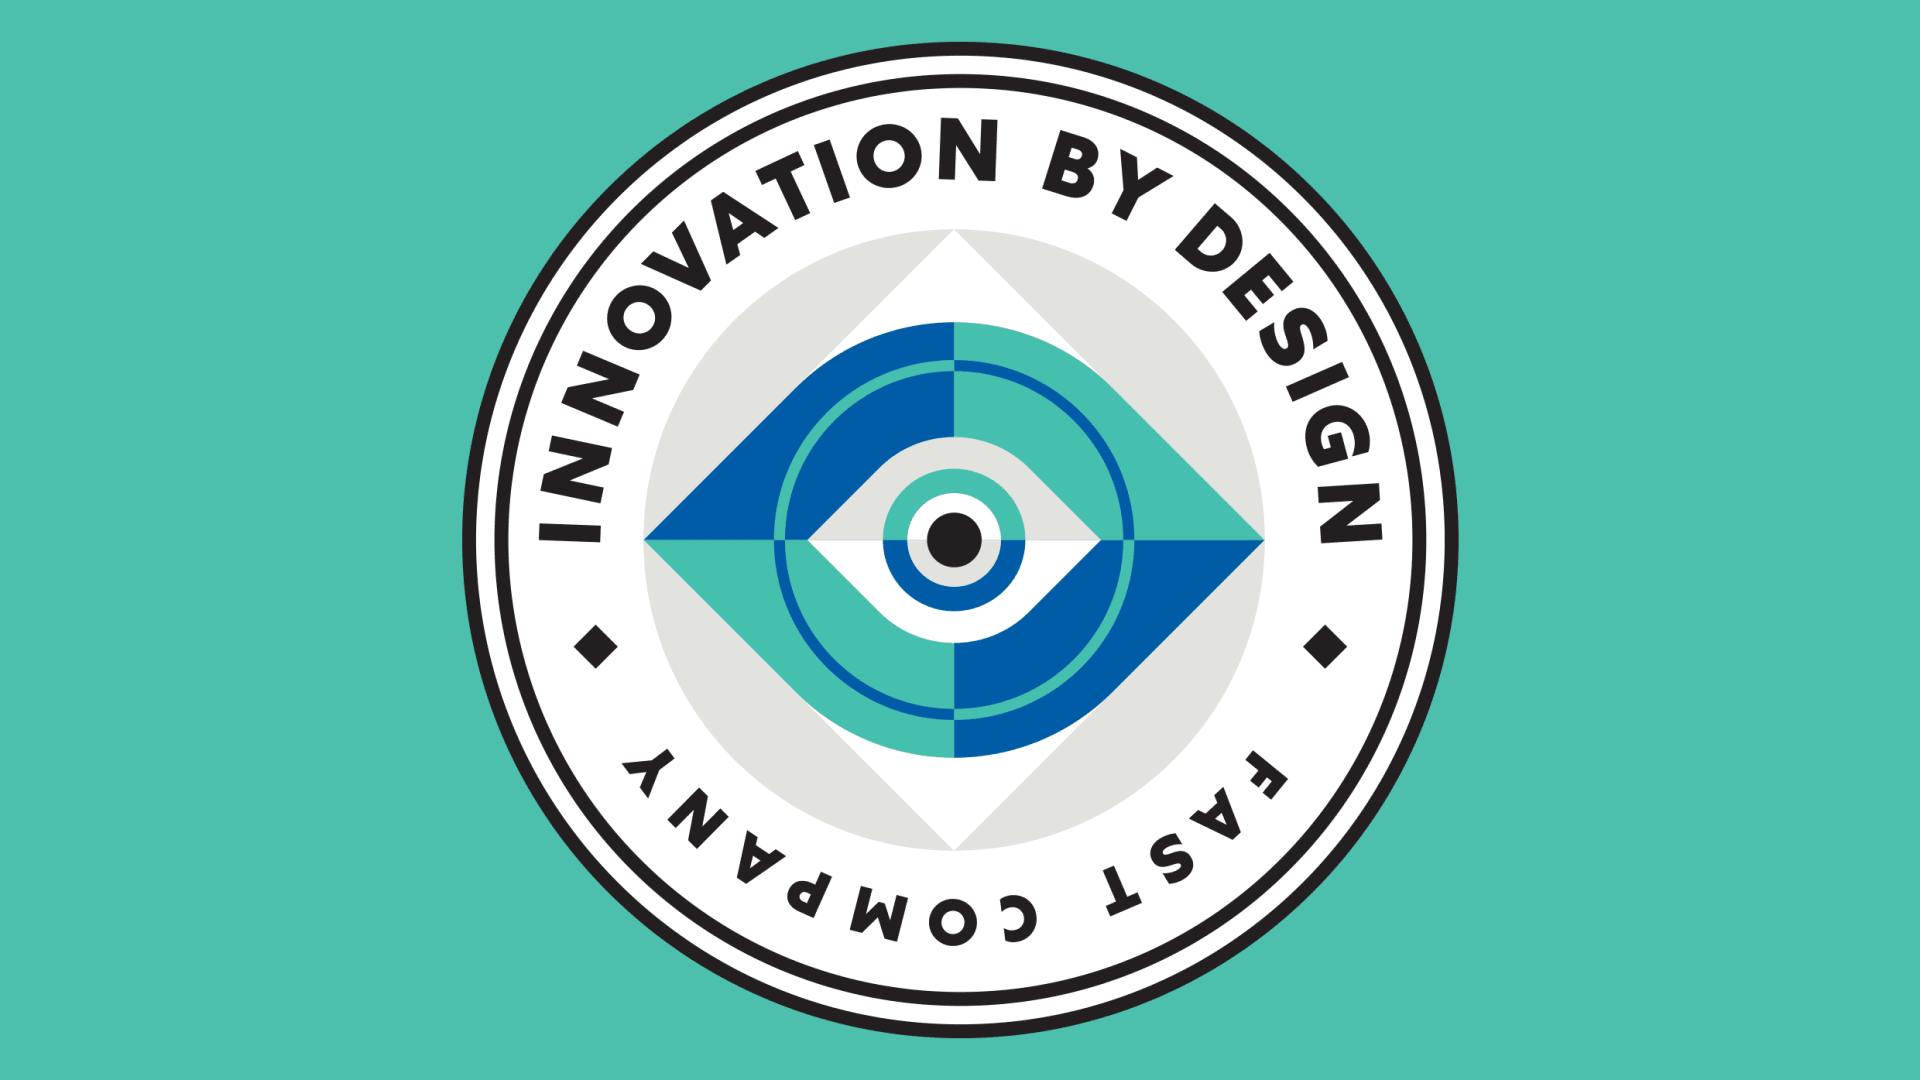 Deadline extended for the 2020 Innovation by Design Awards!